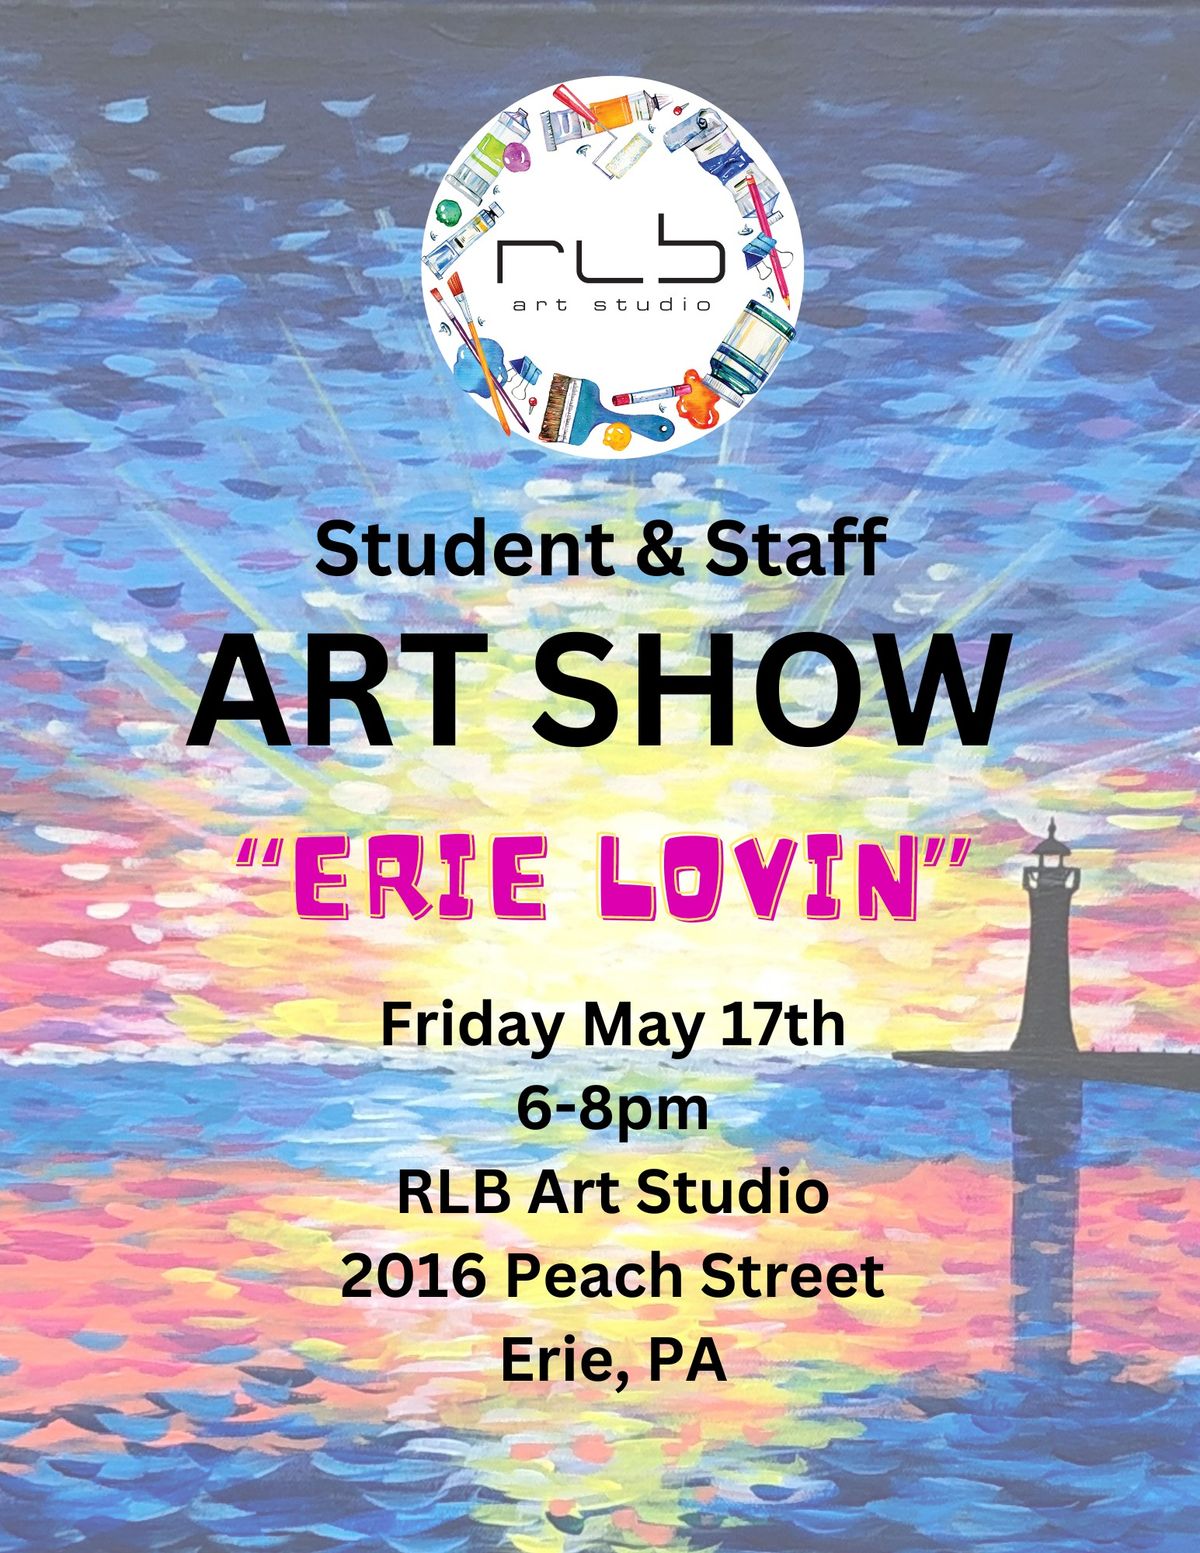 Student & Staff Art Show "ERIE LOVIN" at RLB Art Studio